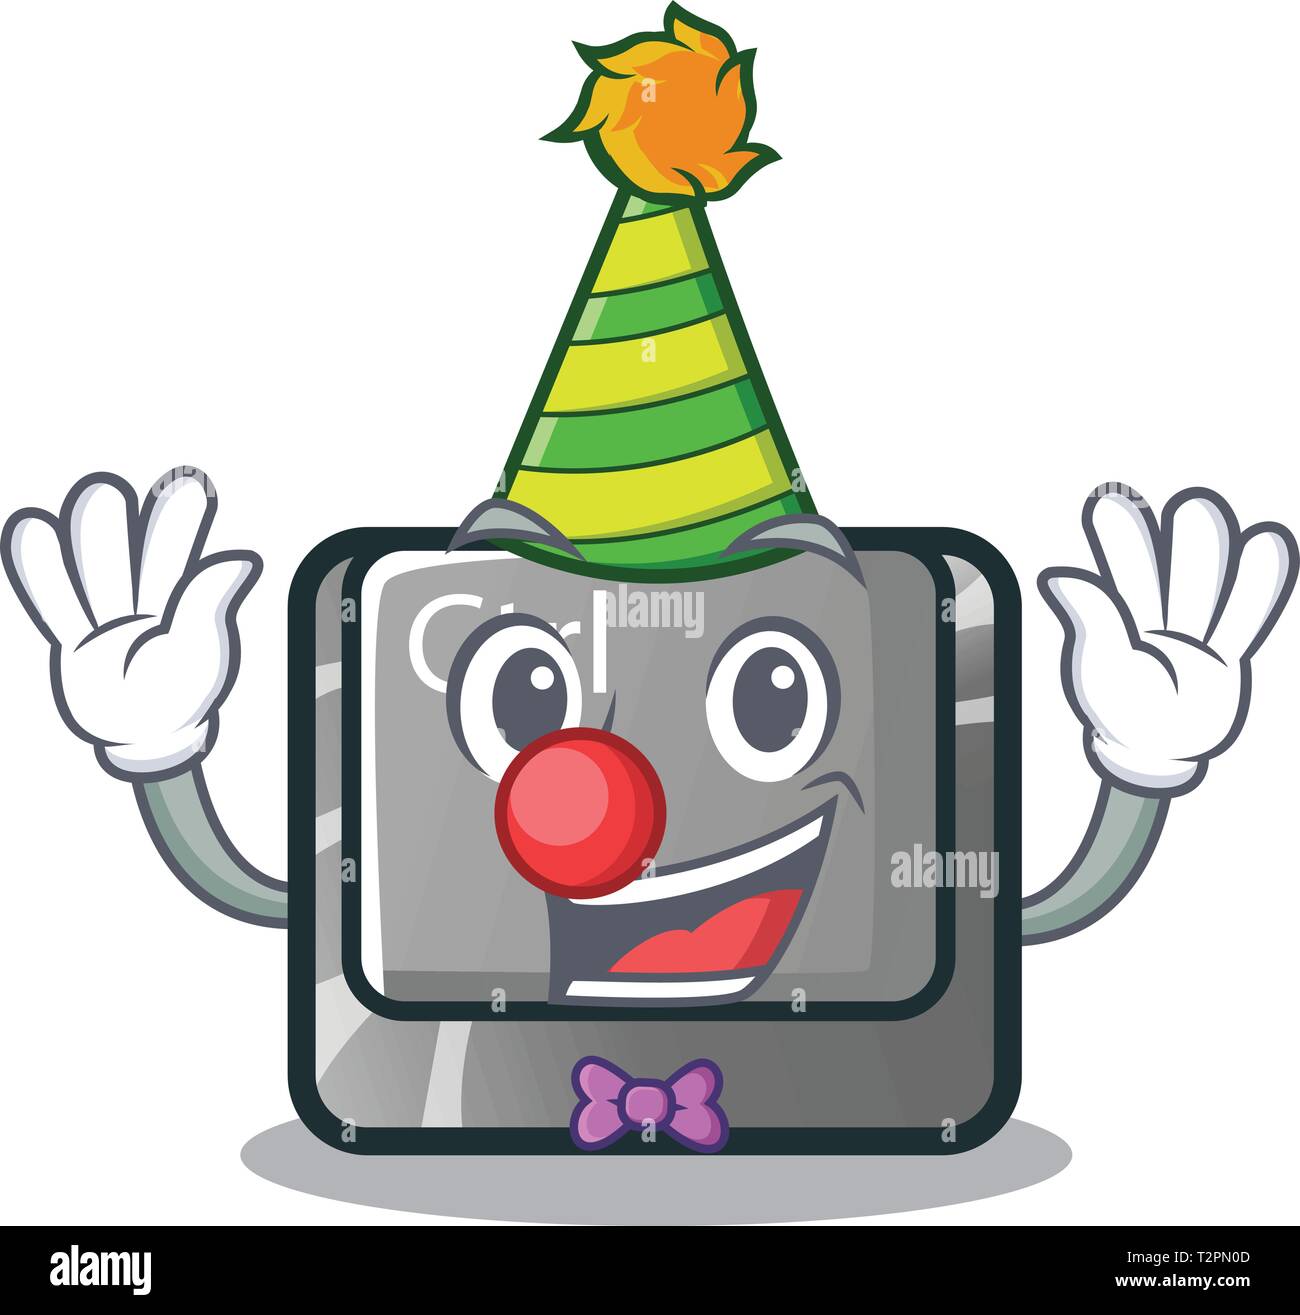 Clown ctrl button on the cartoon keyboard vectoir illustration Stock Vector